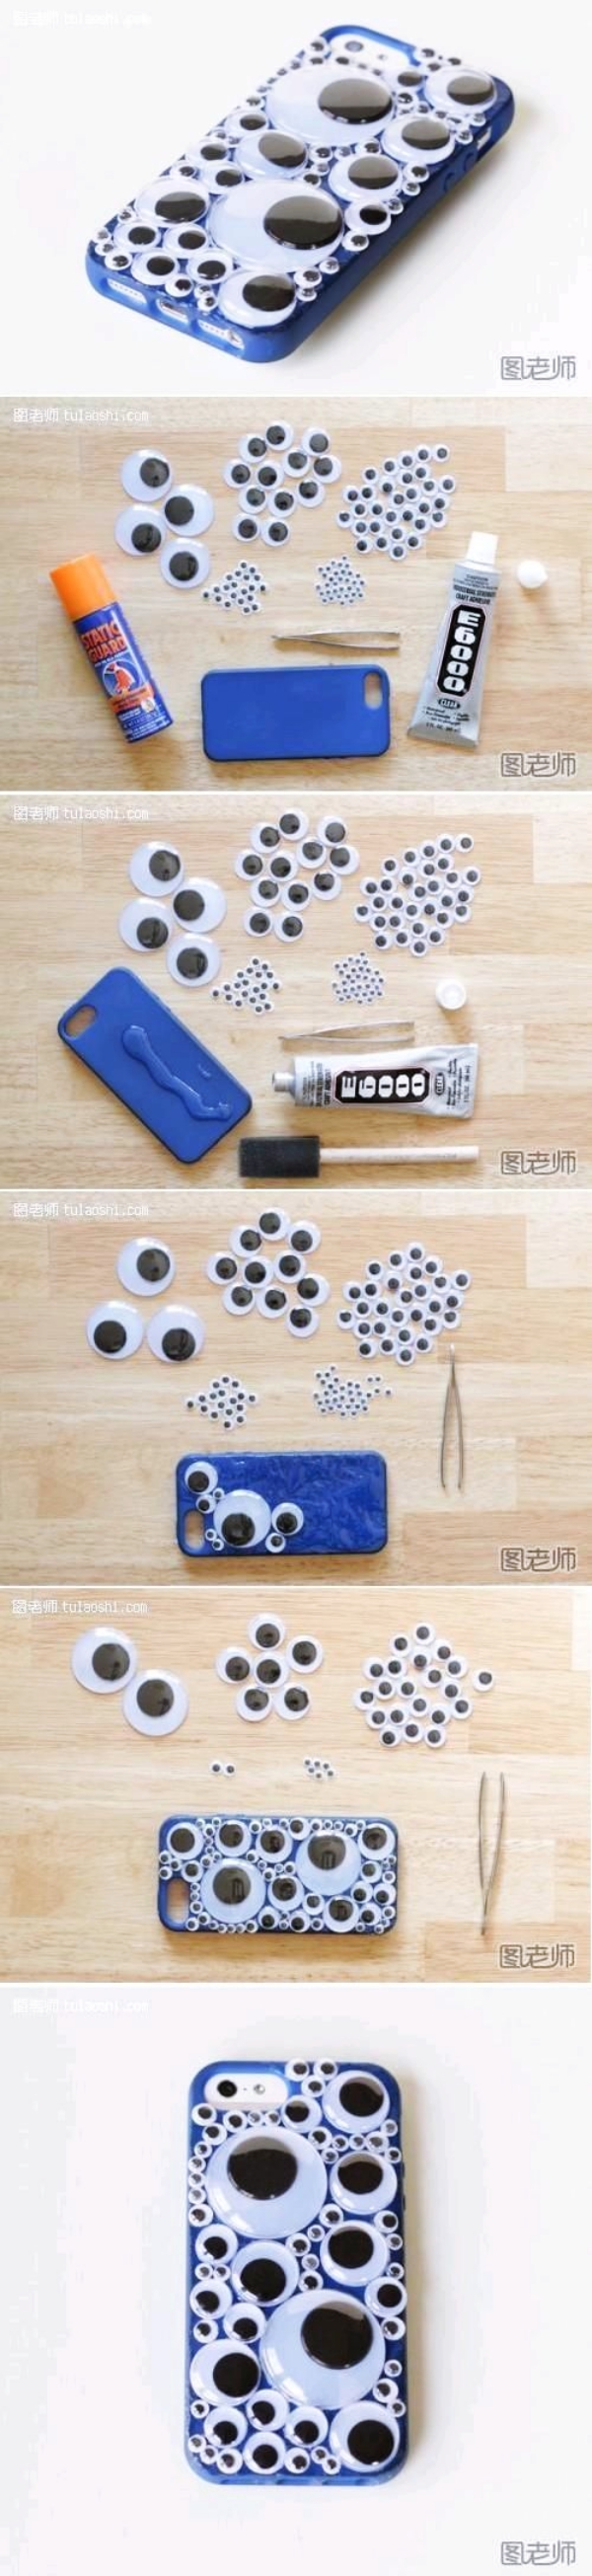 DIY-Cell-Phone-Cover-Ideas